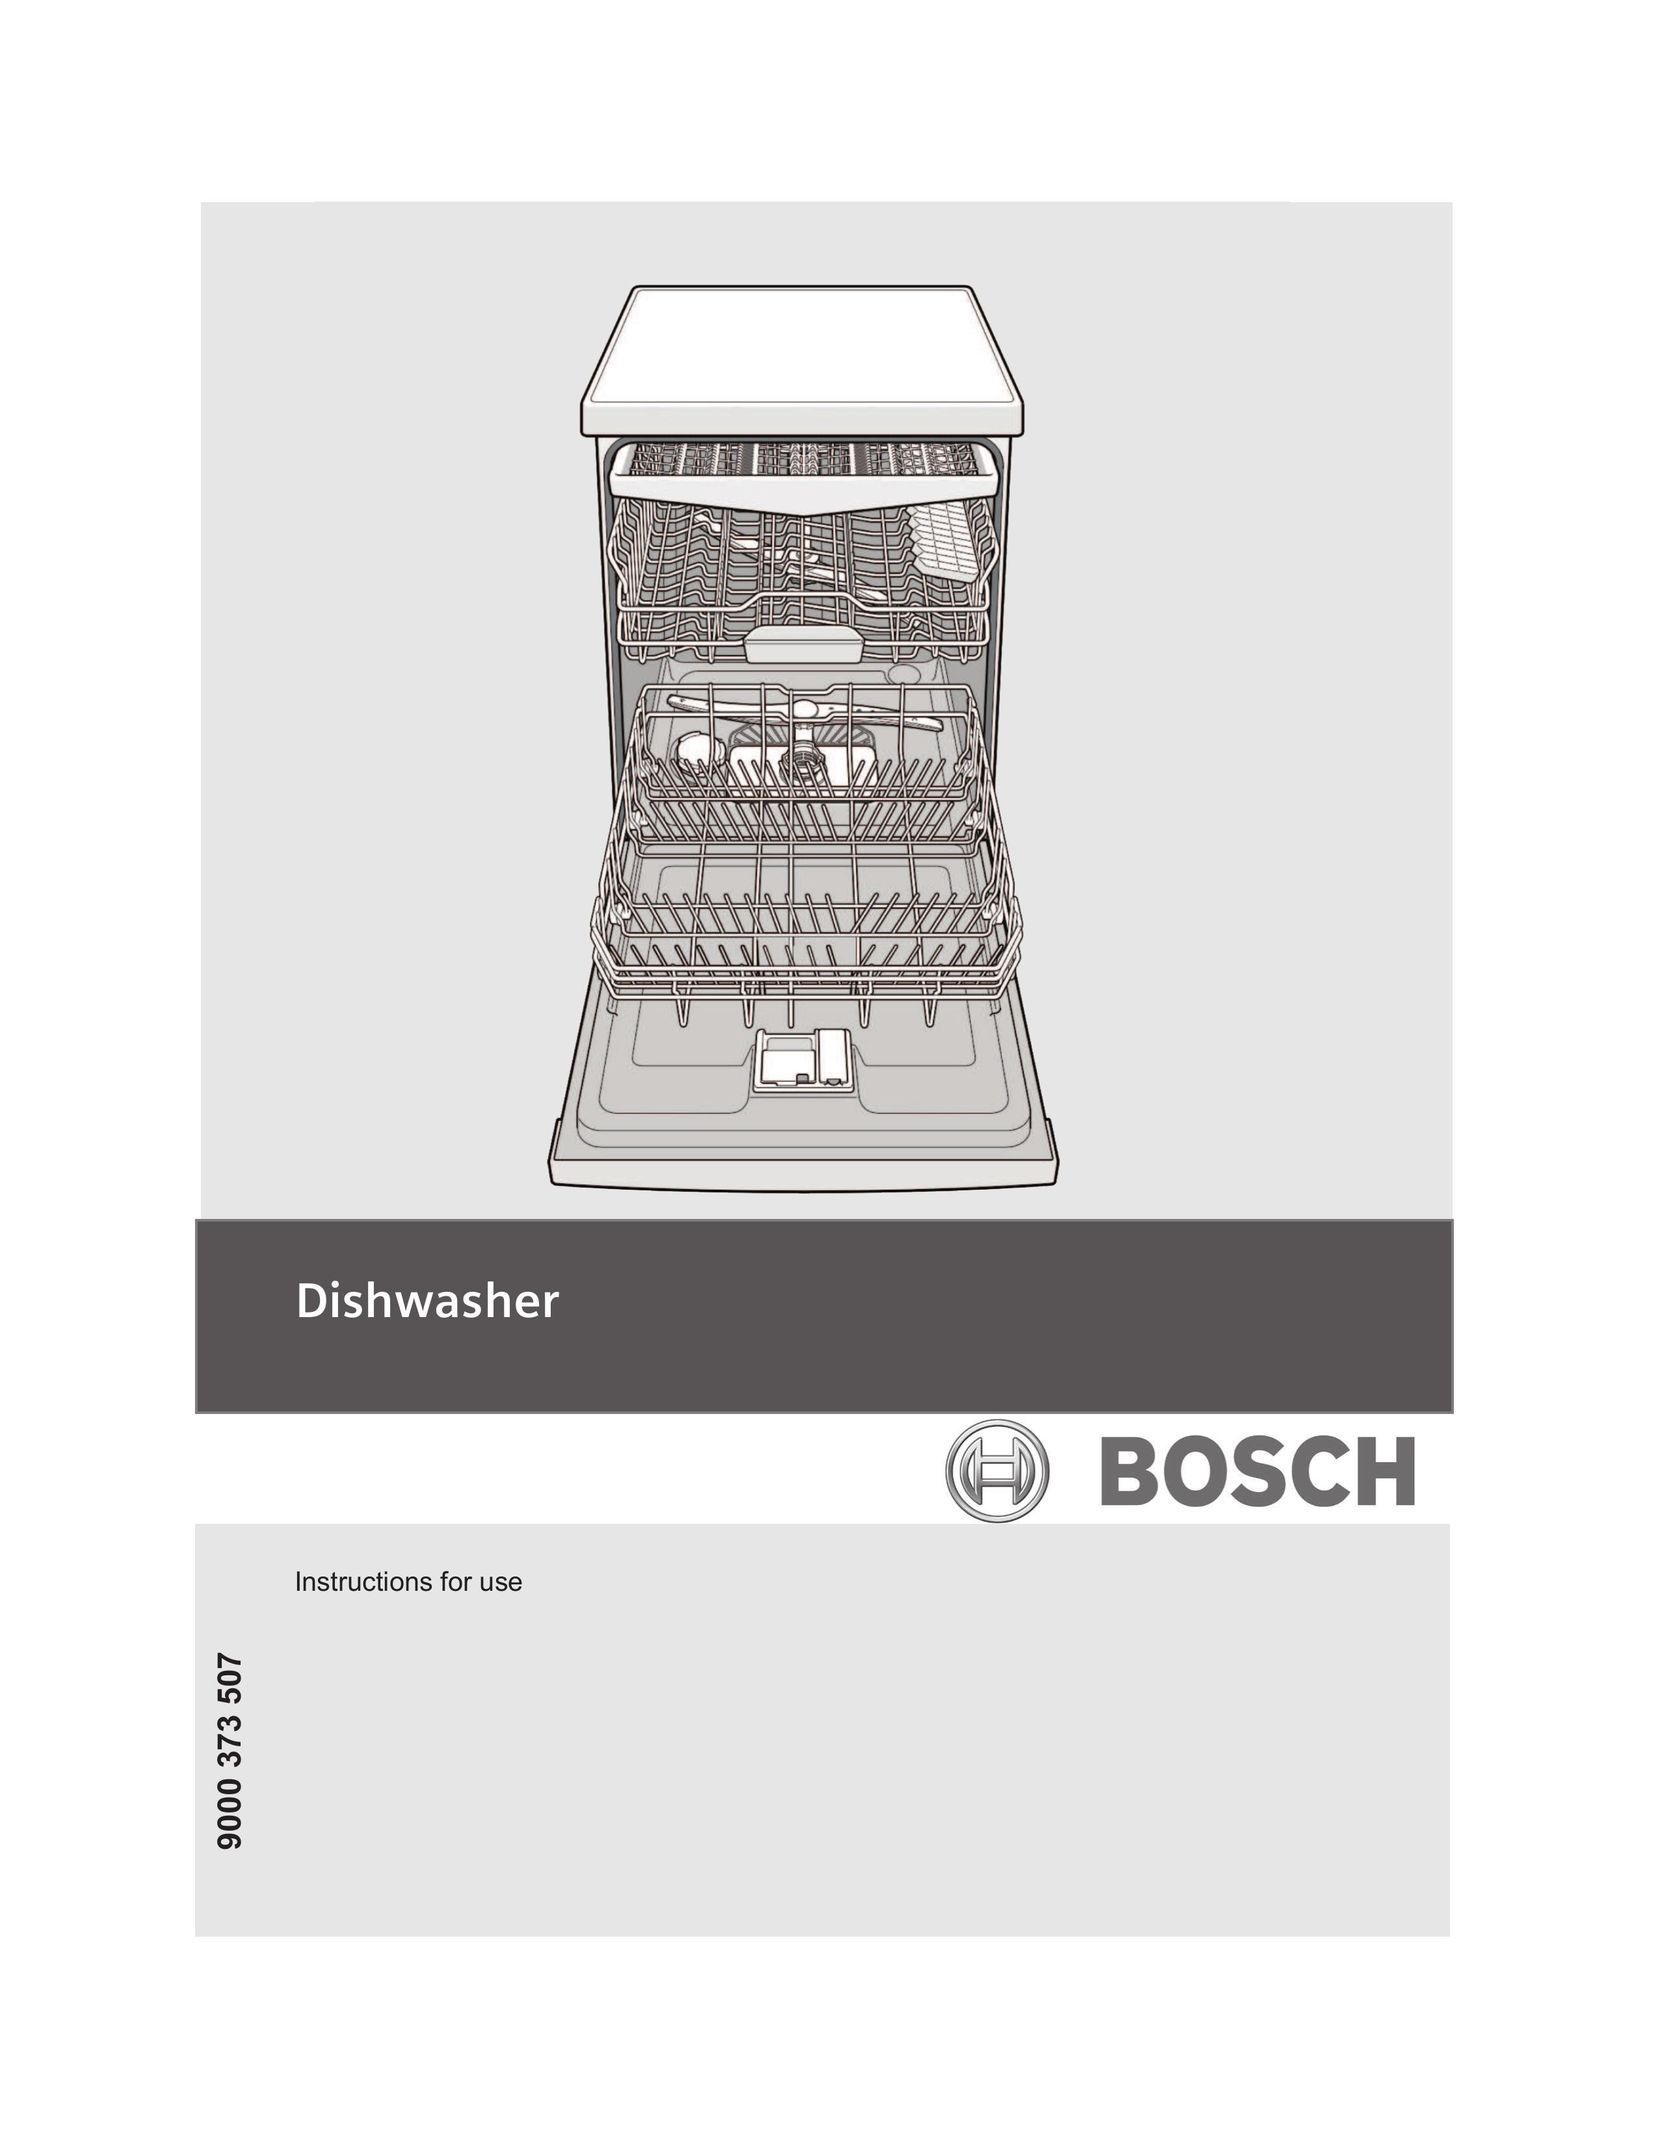 Bosch Appliances 9000373507 Dishwasher User Manual